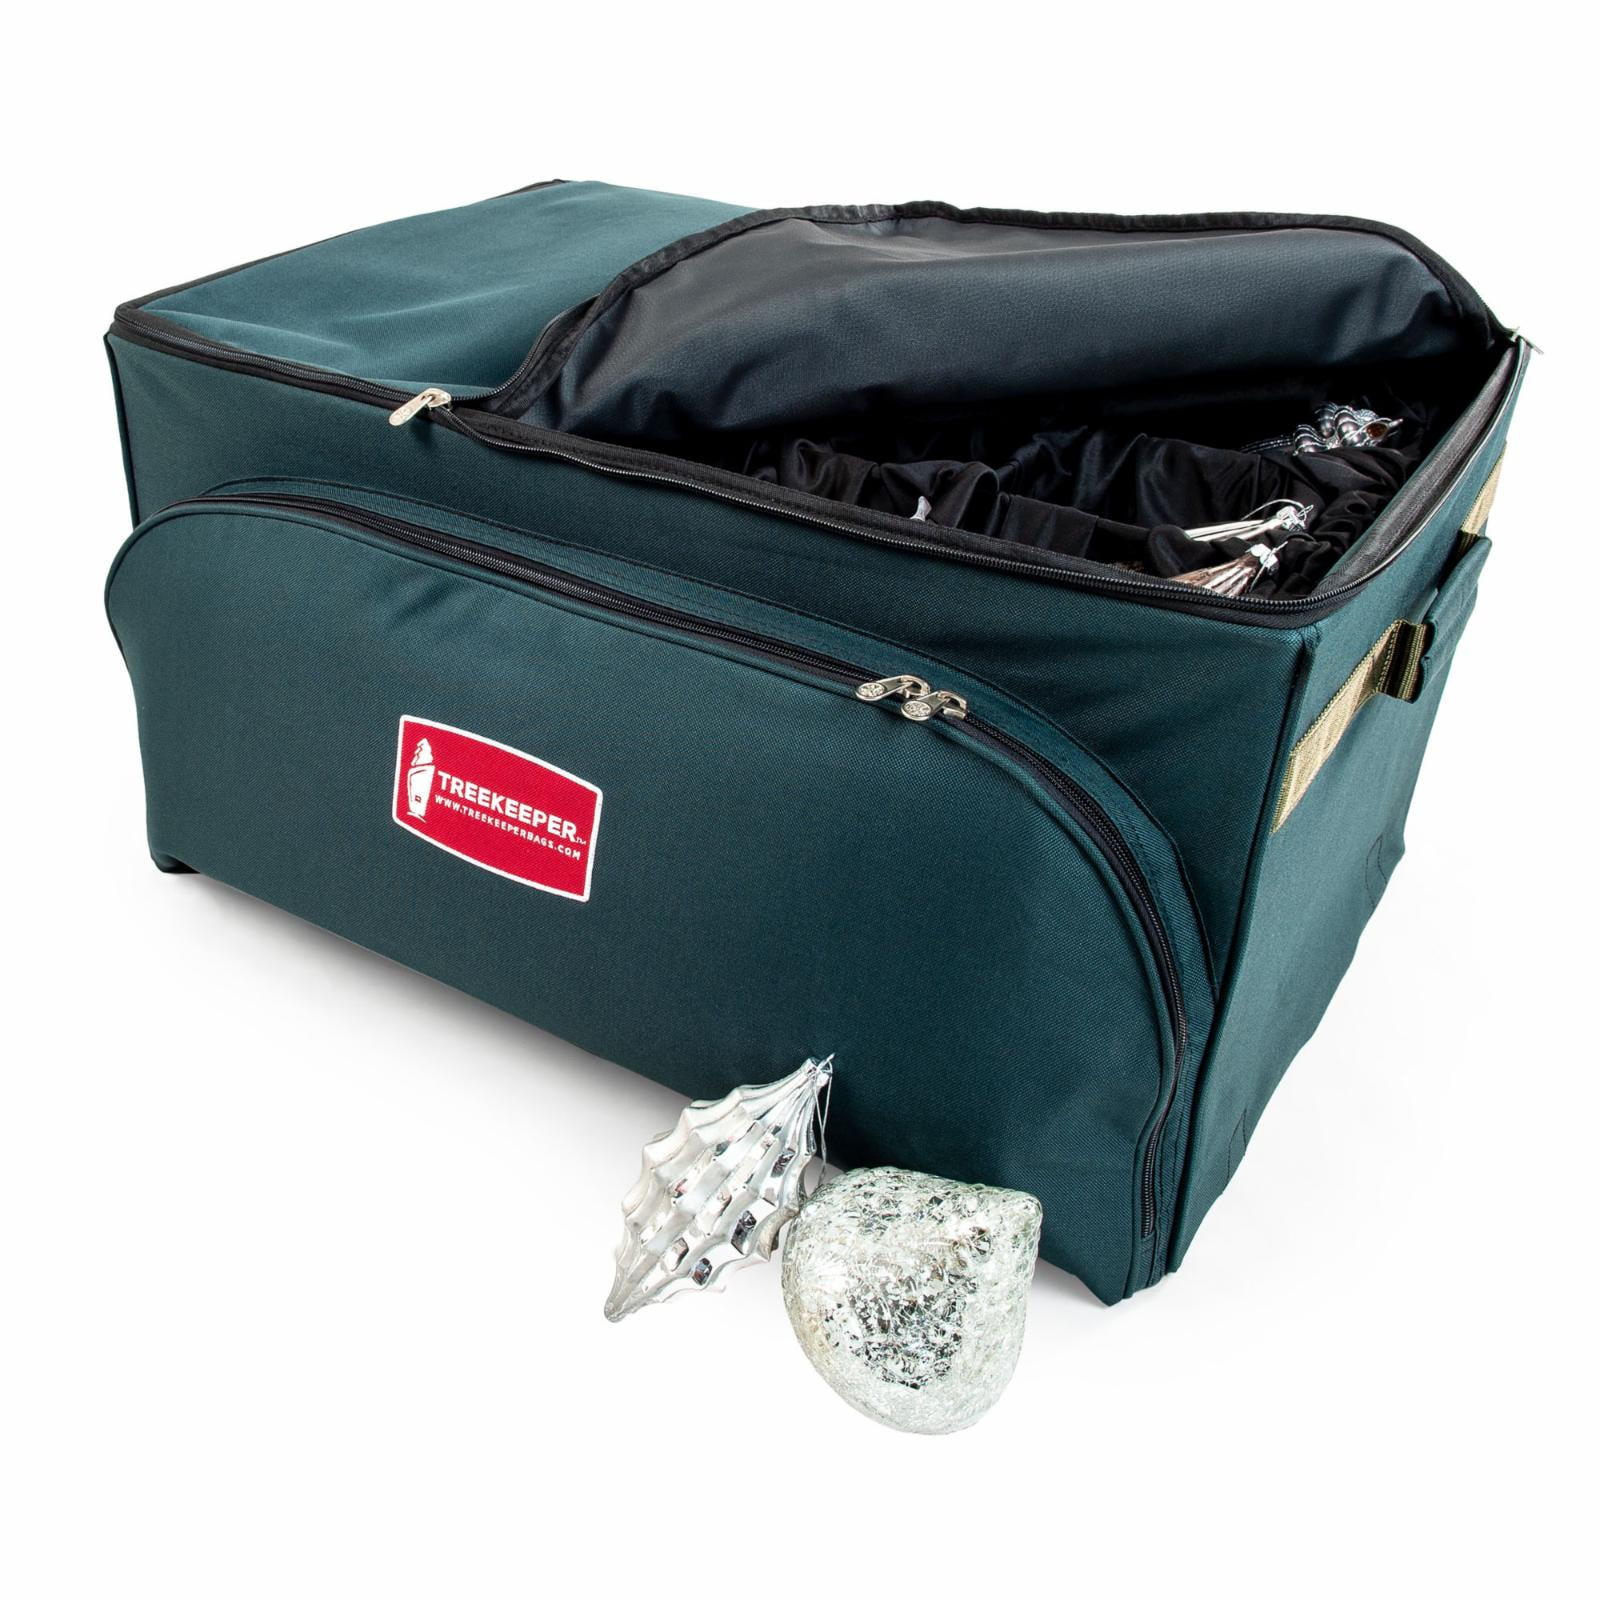 Covermates Keepsakes Adjustable Ornament Storage Box, Carrying Handles, Padded Protection - Holiday Storage-Green Snowflake, Size: Up to 72 Medium